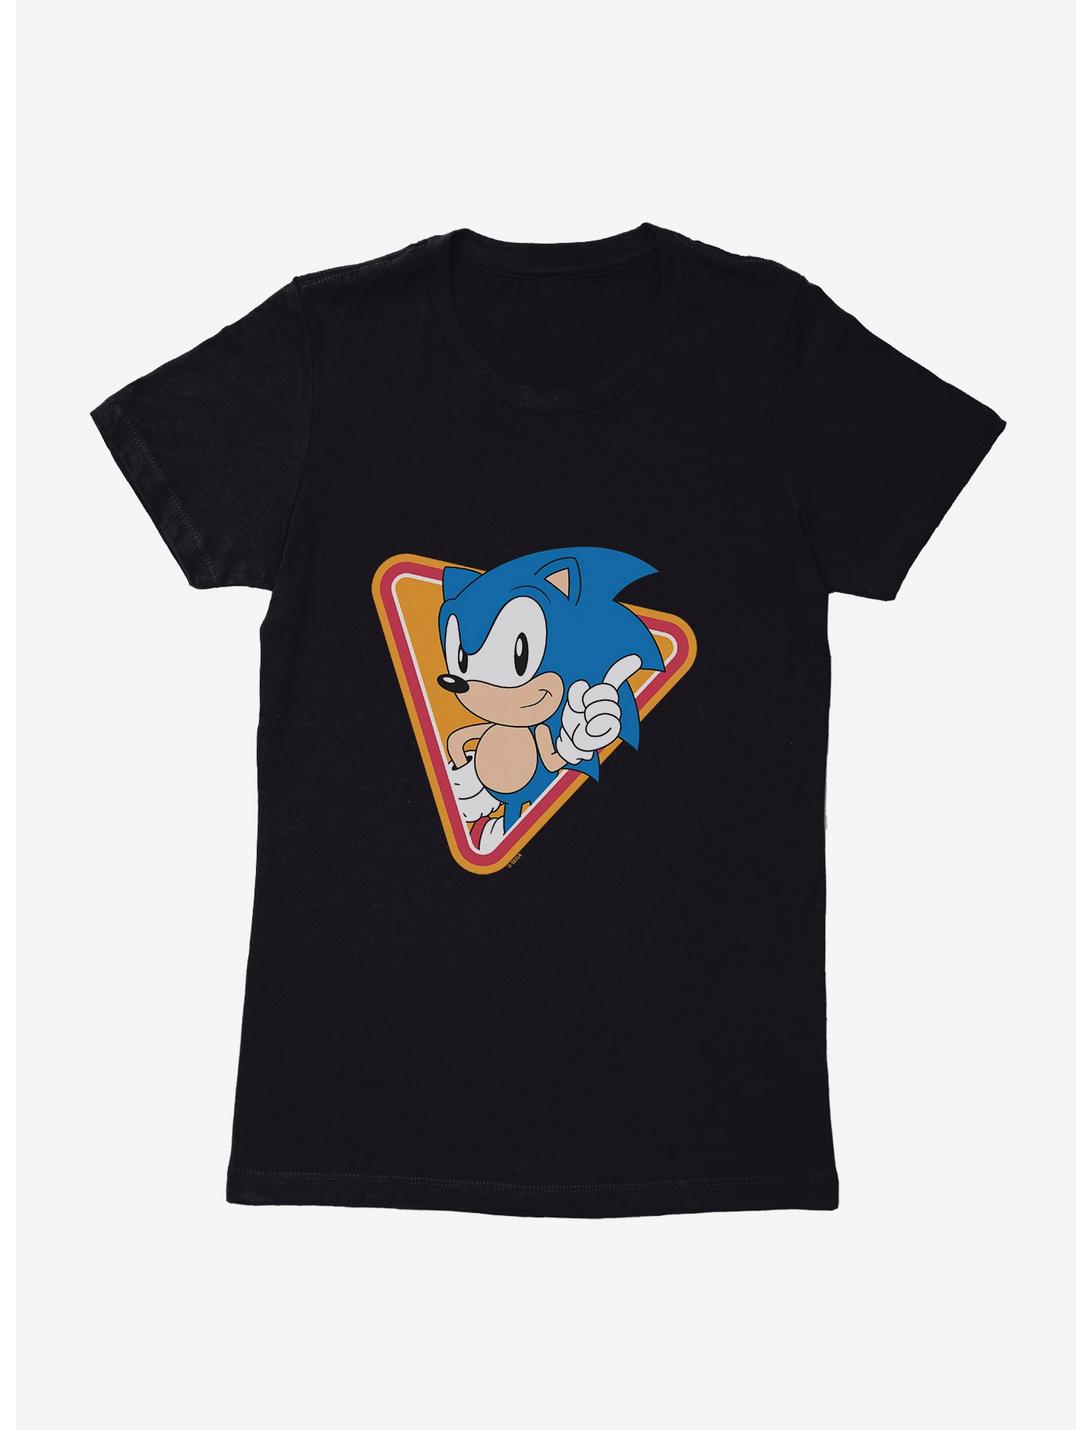 Sonic The Hedgehog Always Looking Up Womens T-Shirt, BLACK, hi-res